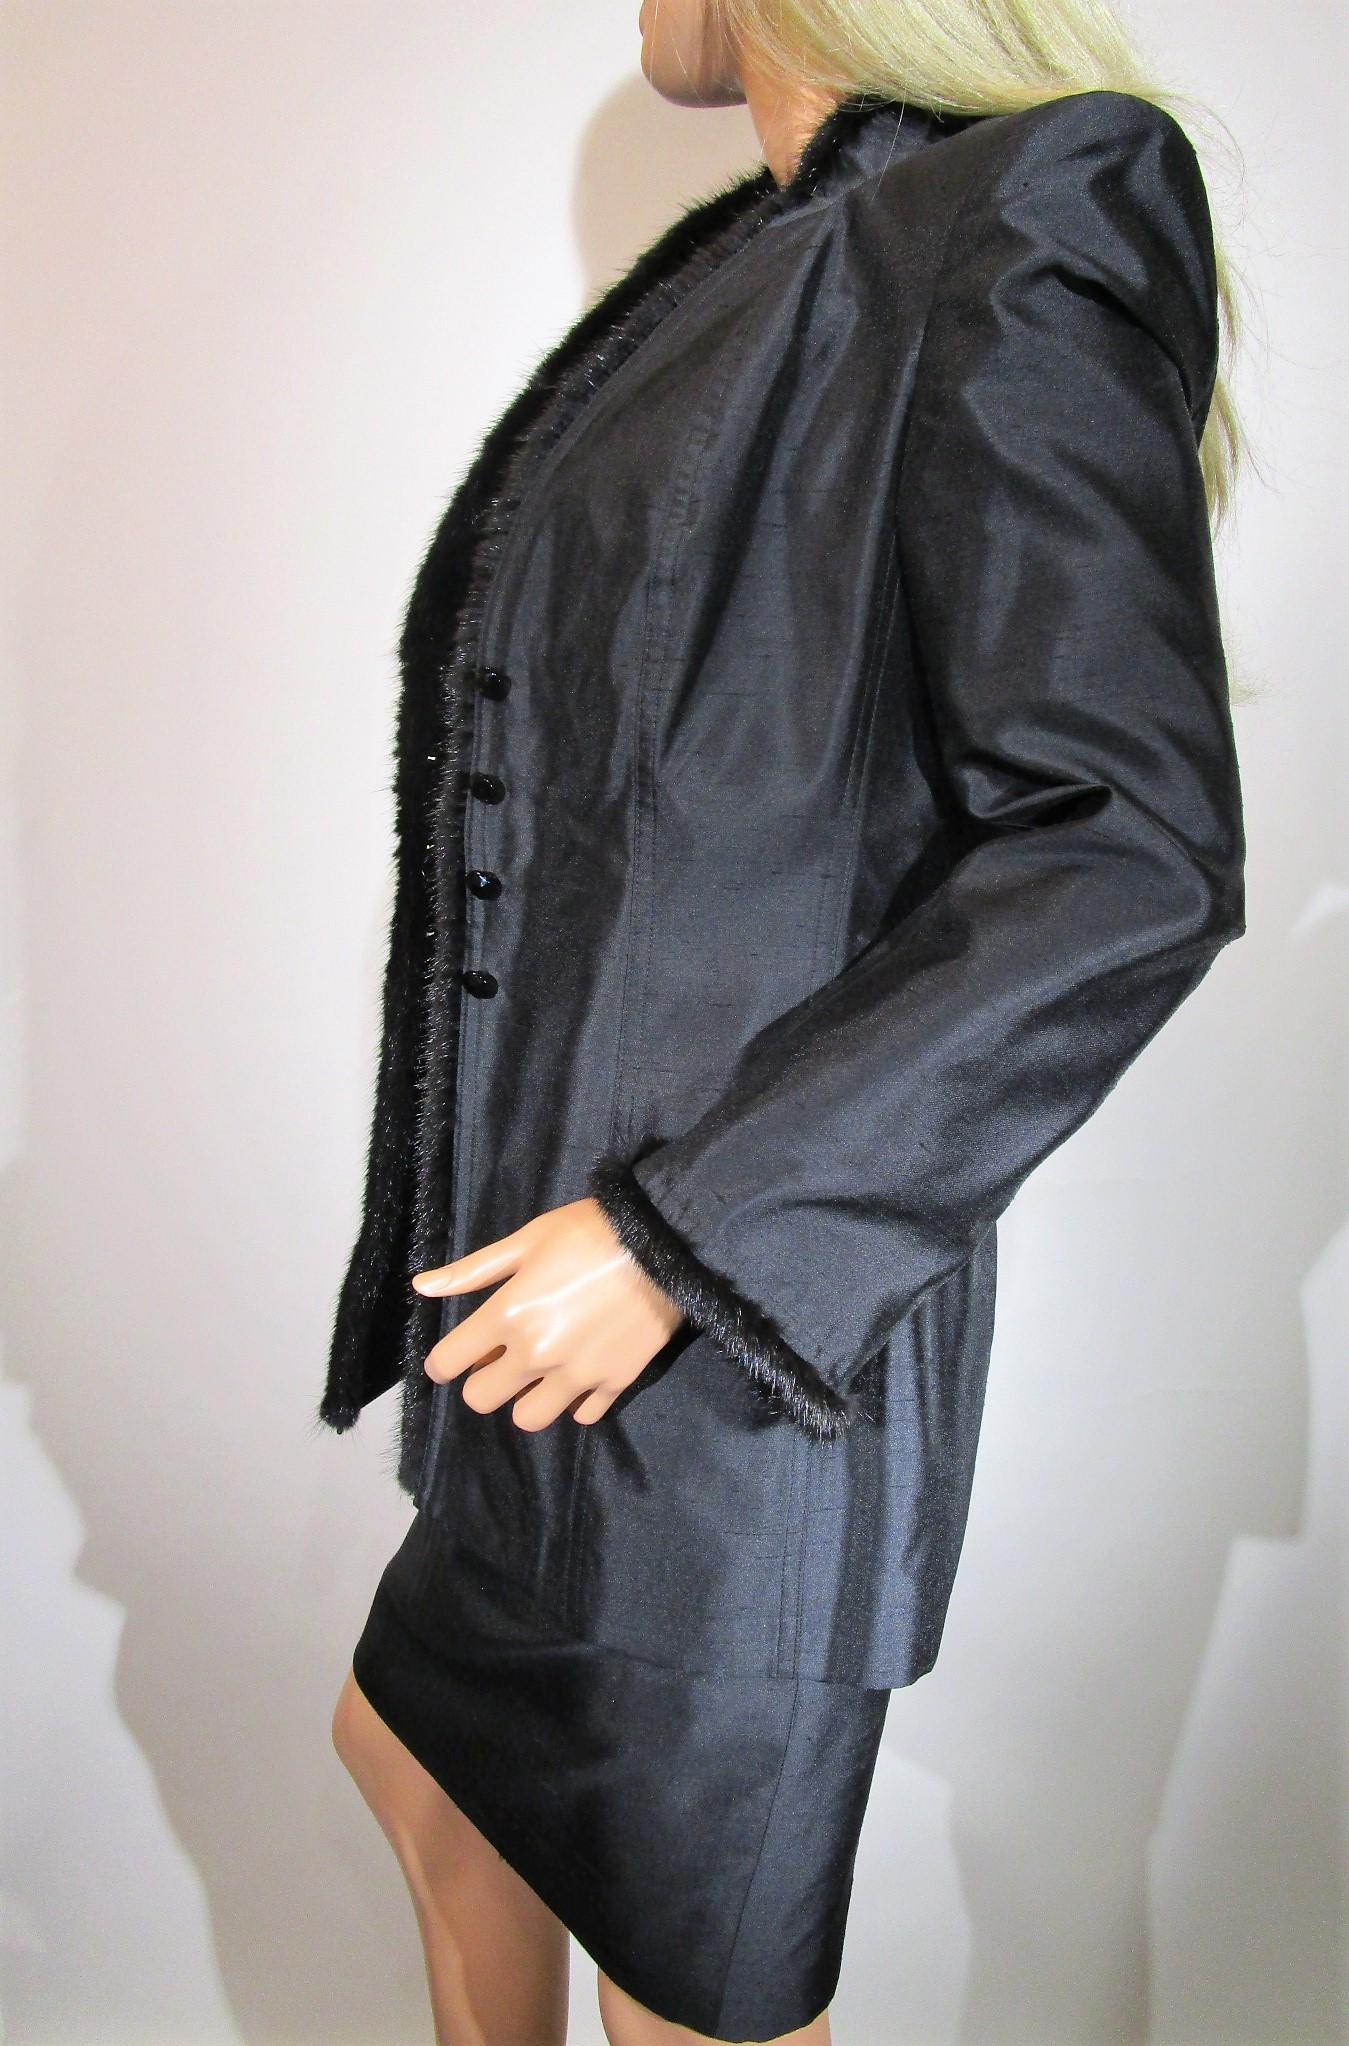 ESCADA 3-piece Set MINK Trim Black Blazer Skirt Tank Top Jacket Sz 36/ US6 In Excellent Condition For Sale In Lakewood, CO